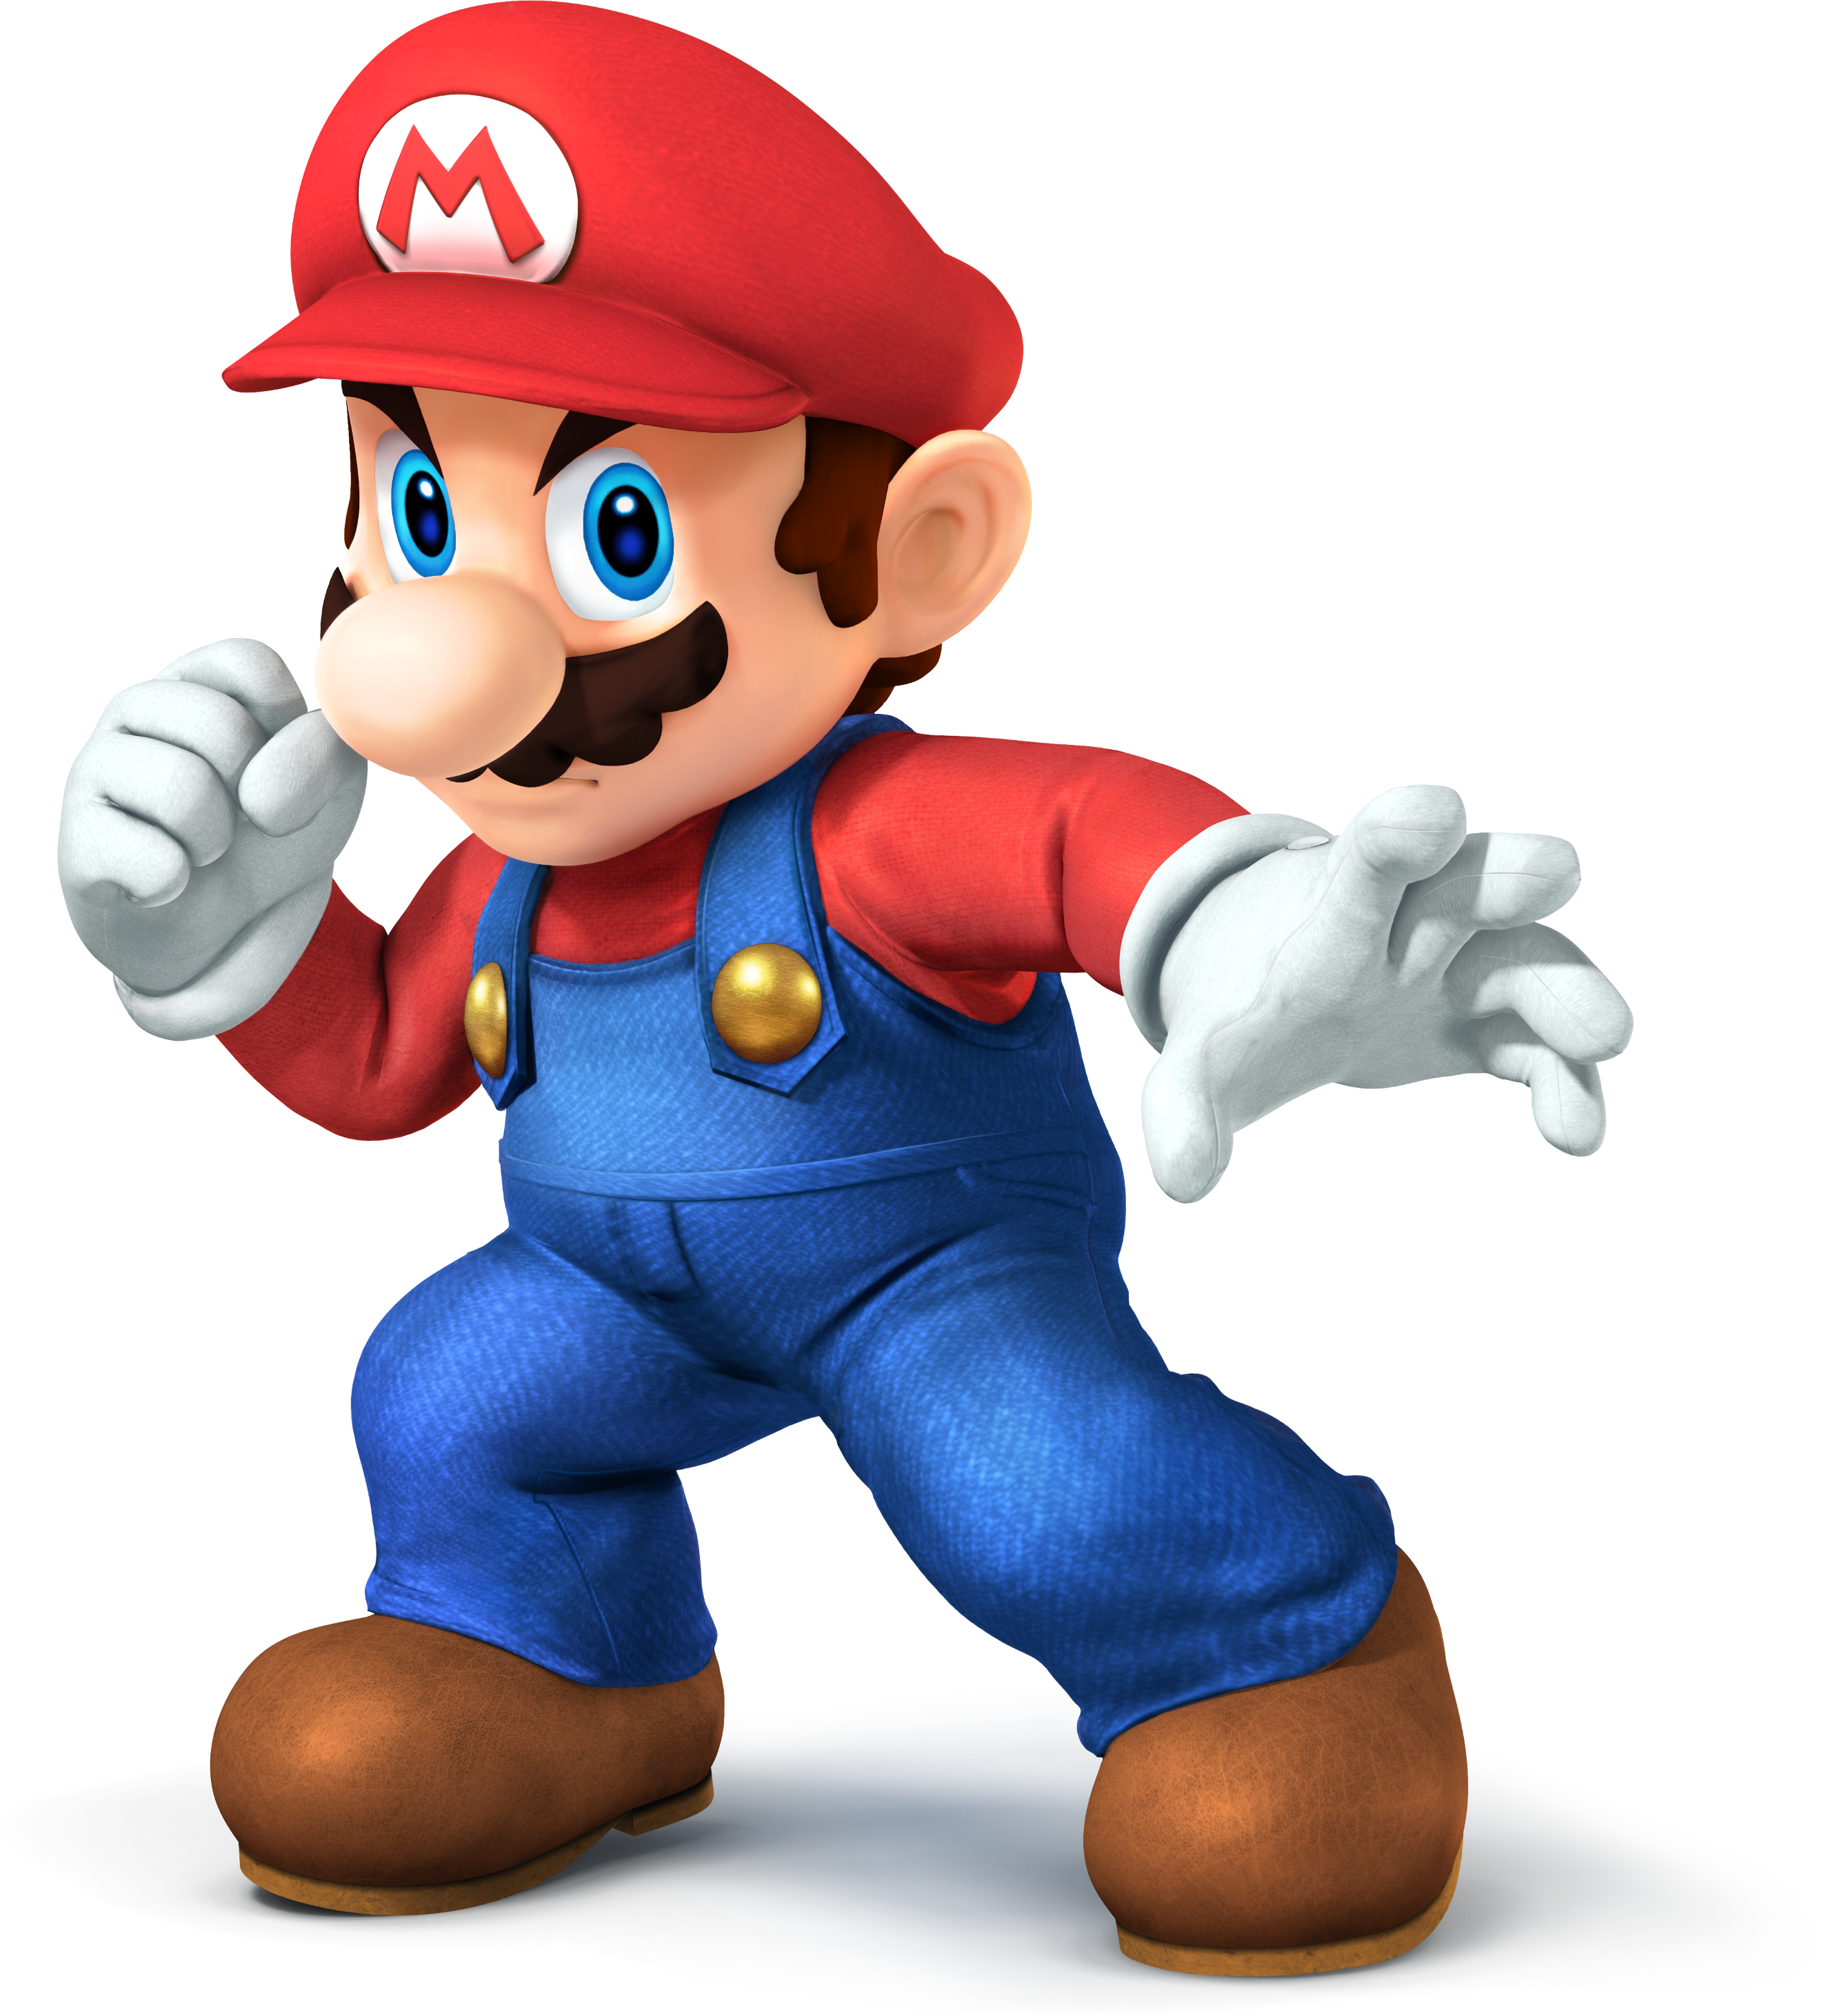 Mario smash bros. Марио Smash Bros. Super Mario Smash Bros игра. Марио персонажи. Super Smash Bros Марио.